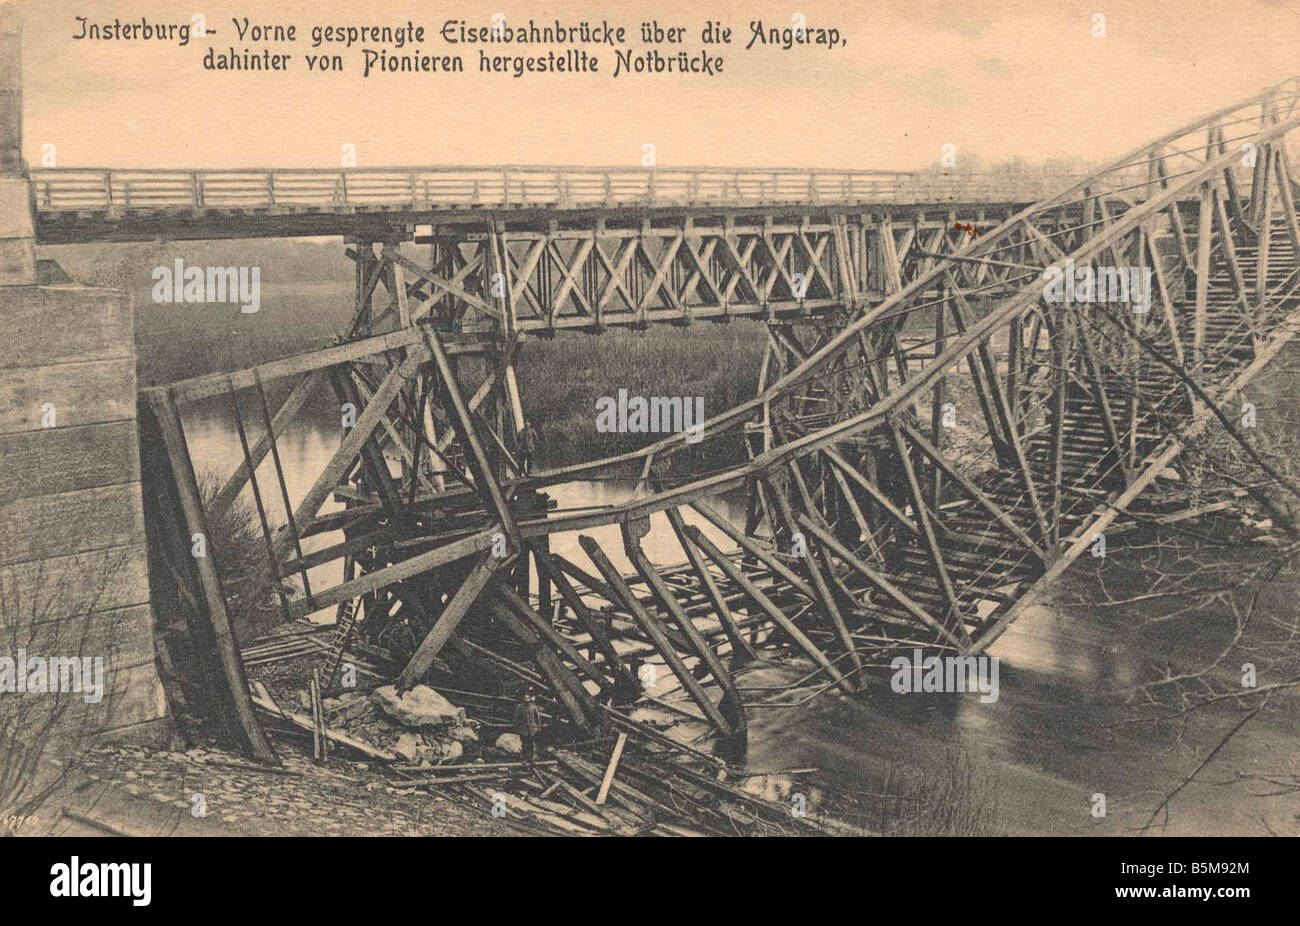 2 G55 O1 1914 17 Destroyed bridge over Angrapa river WWI History WWI Eastern Front Insterburg Vorne gesprengte Eisen bahnbruecke Stock Photo